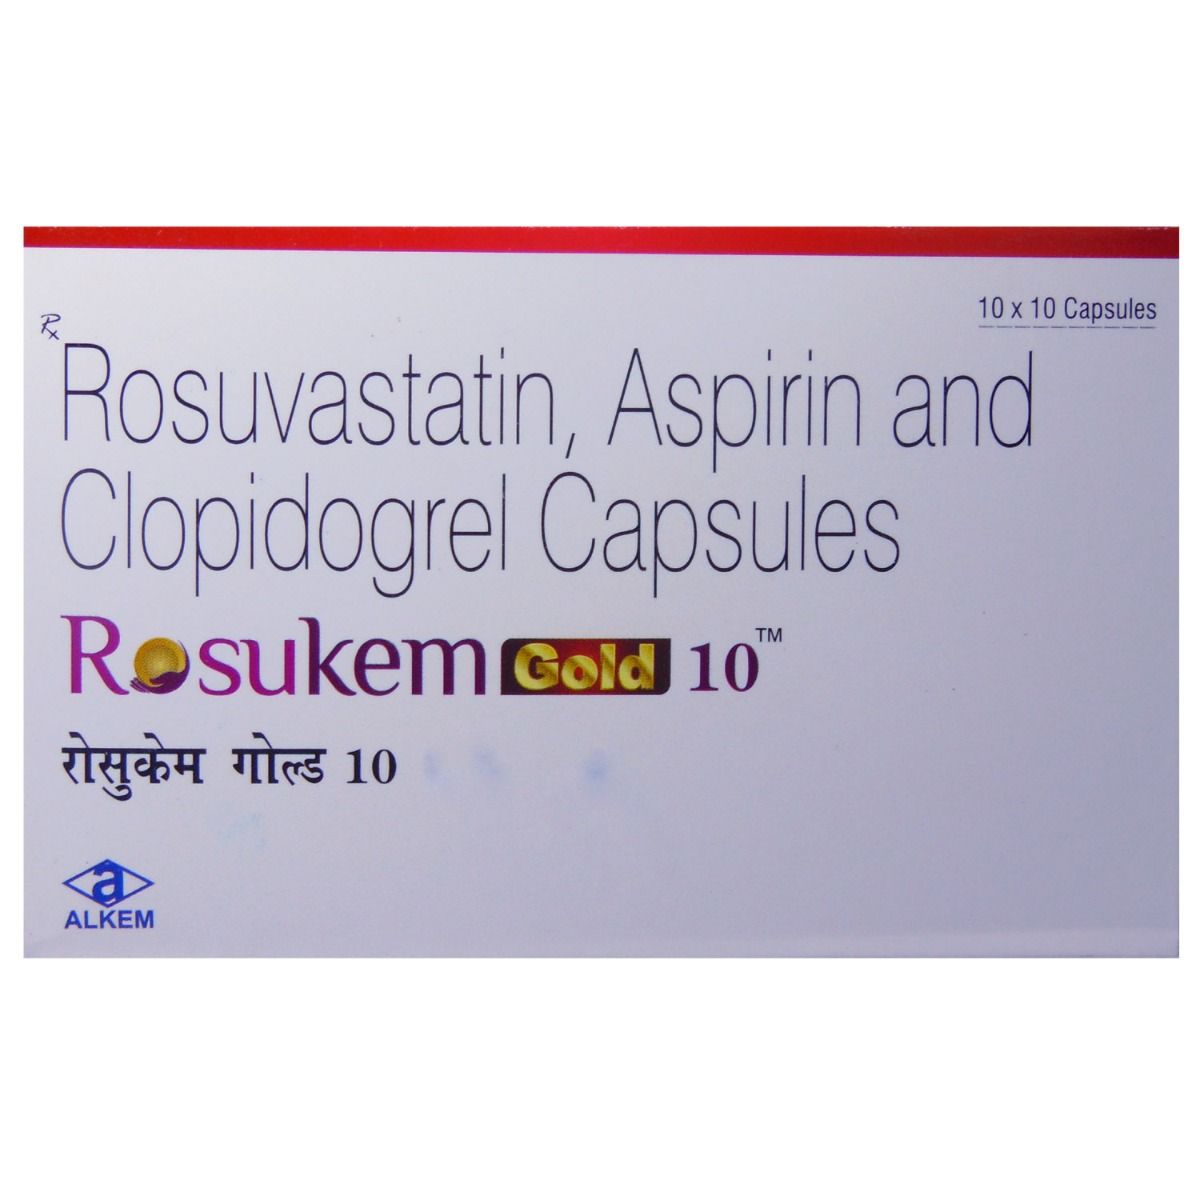 Rosukem Gold 10 Capsule 10's, Pack of 10 CapsuleS